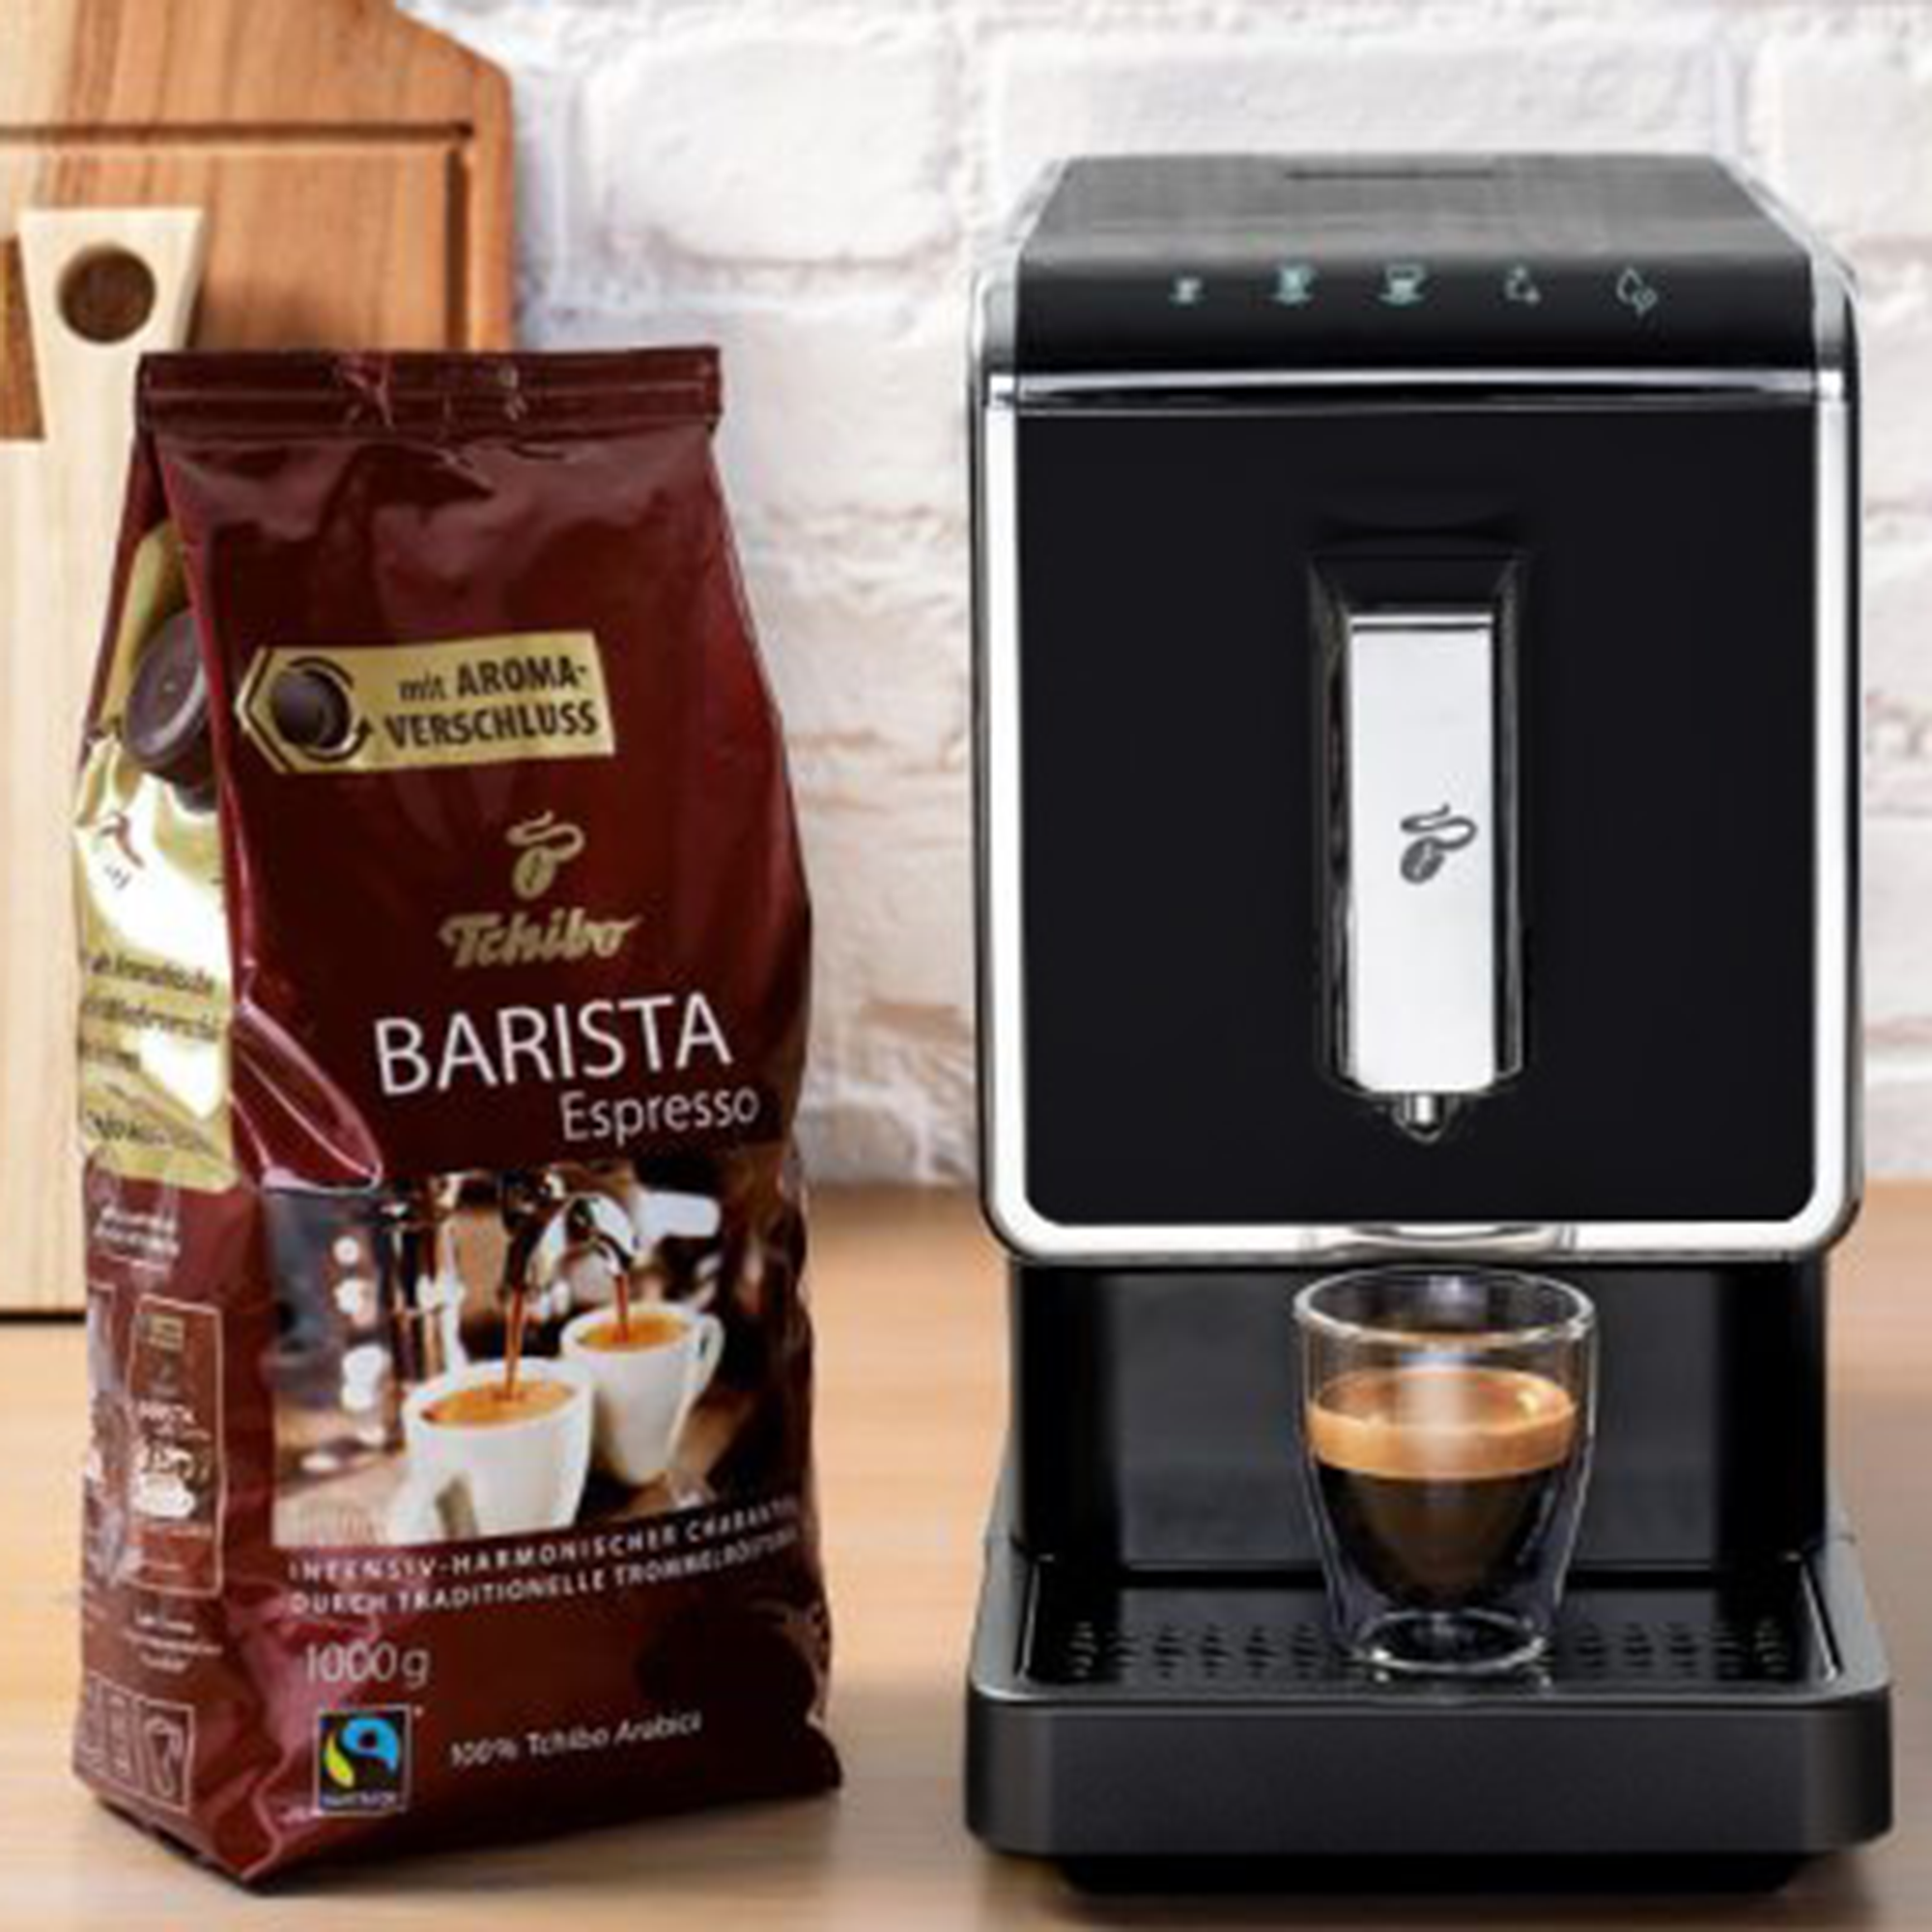 Barista Espresso 17.6oz/35.2oz (Subscription)